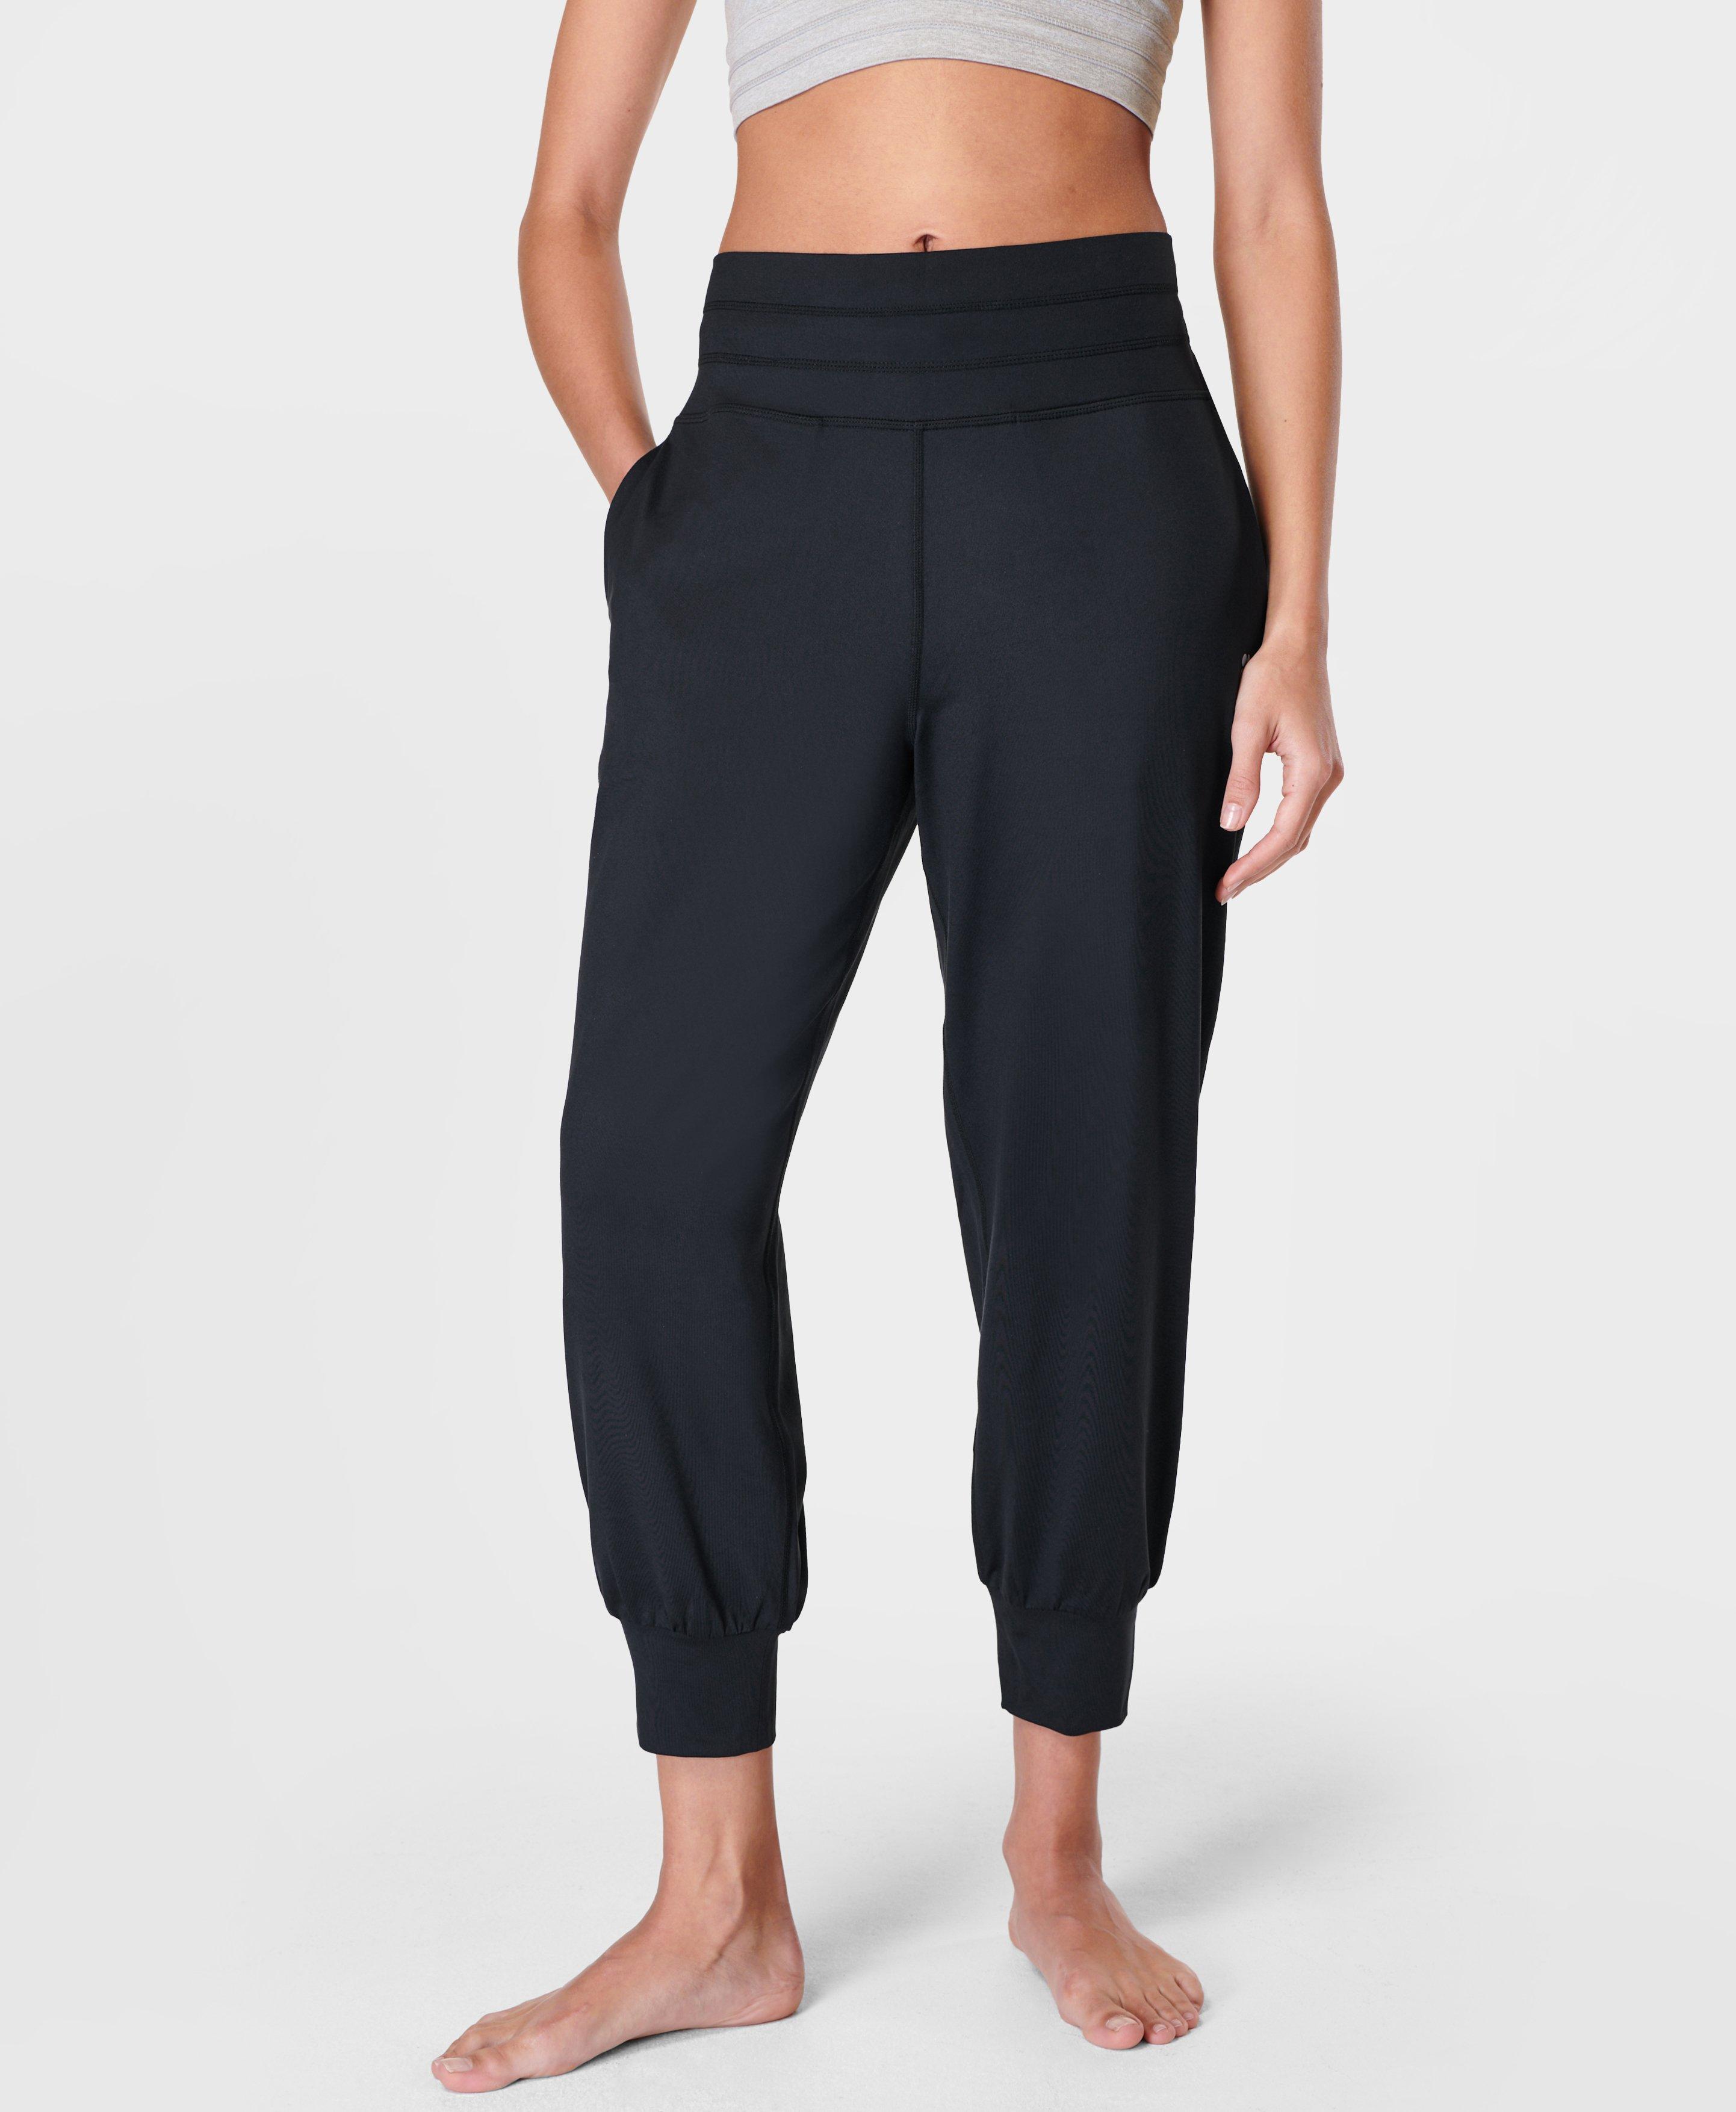 Women's Sweaty Betty Cropped & Capri Pants